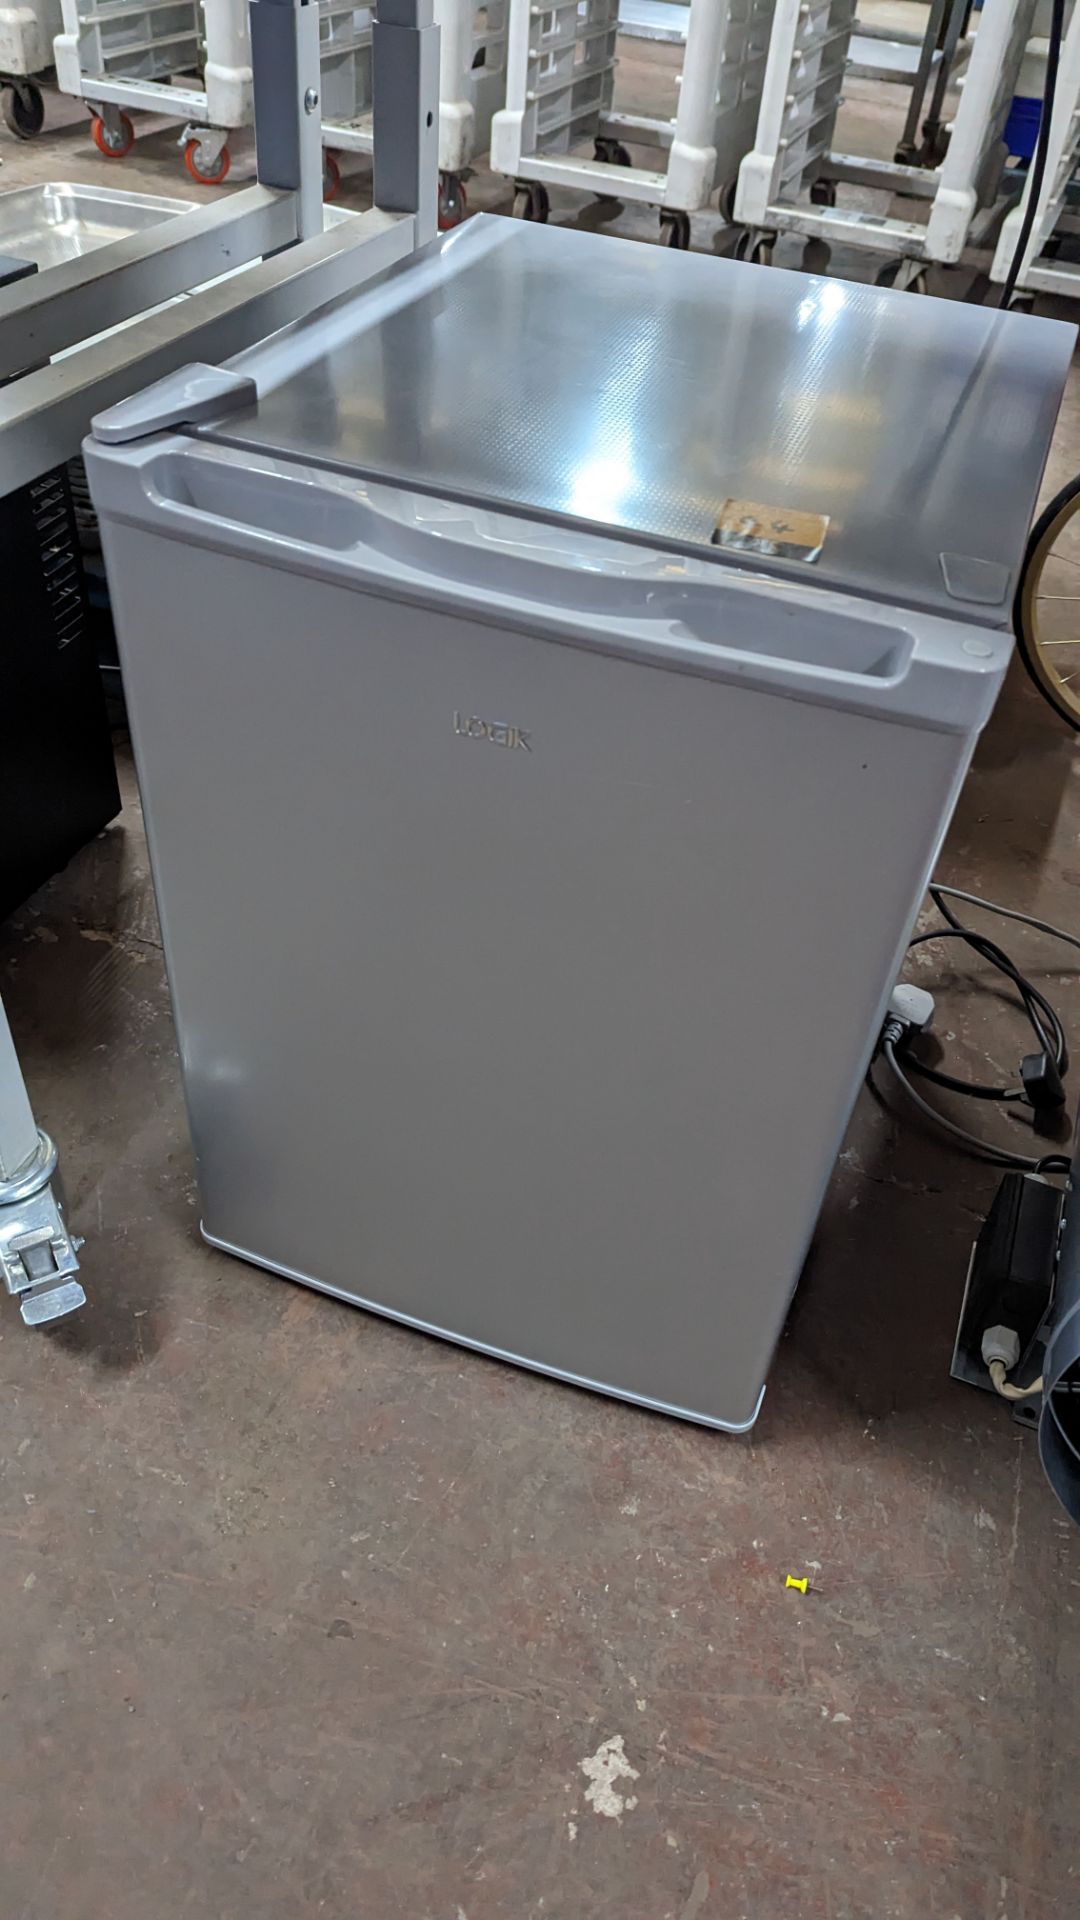 Logik pale grey compact fridge with mini ice compartment